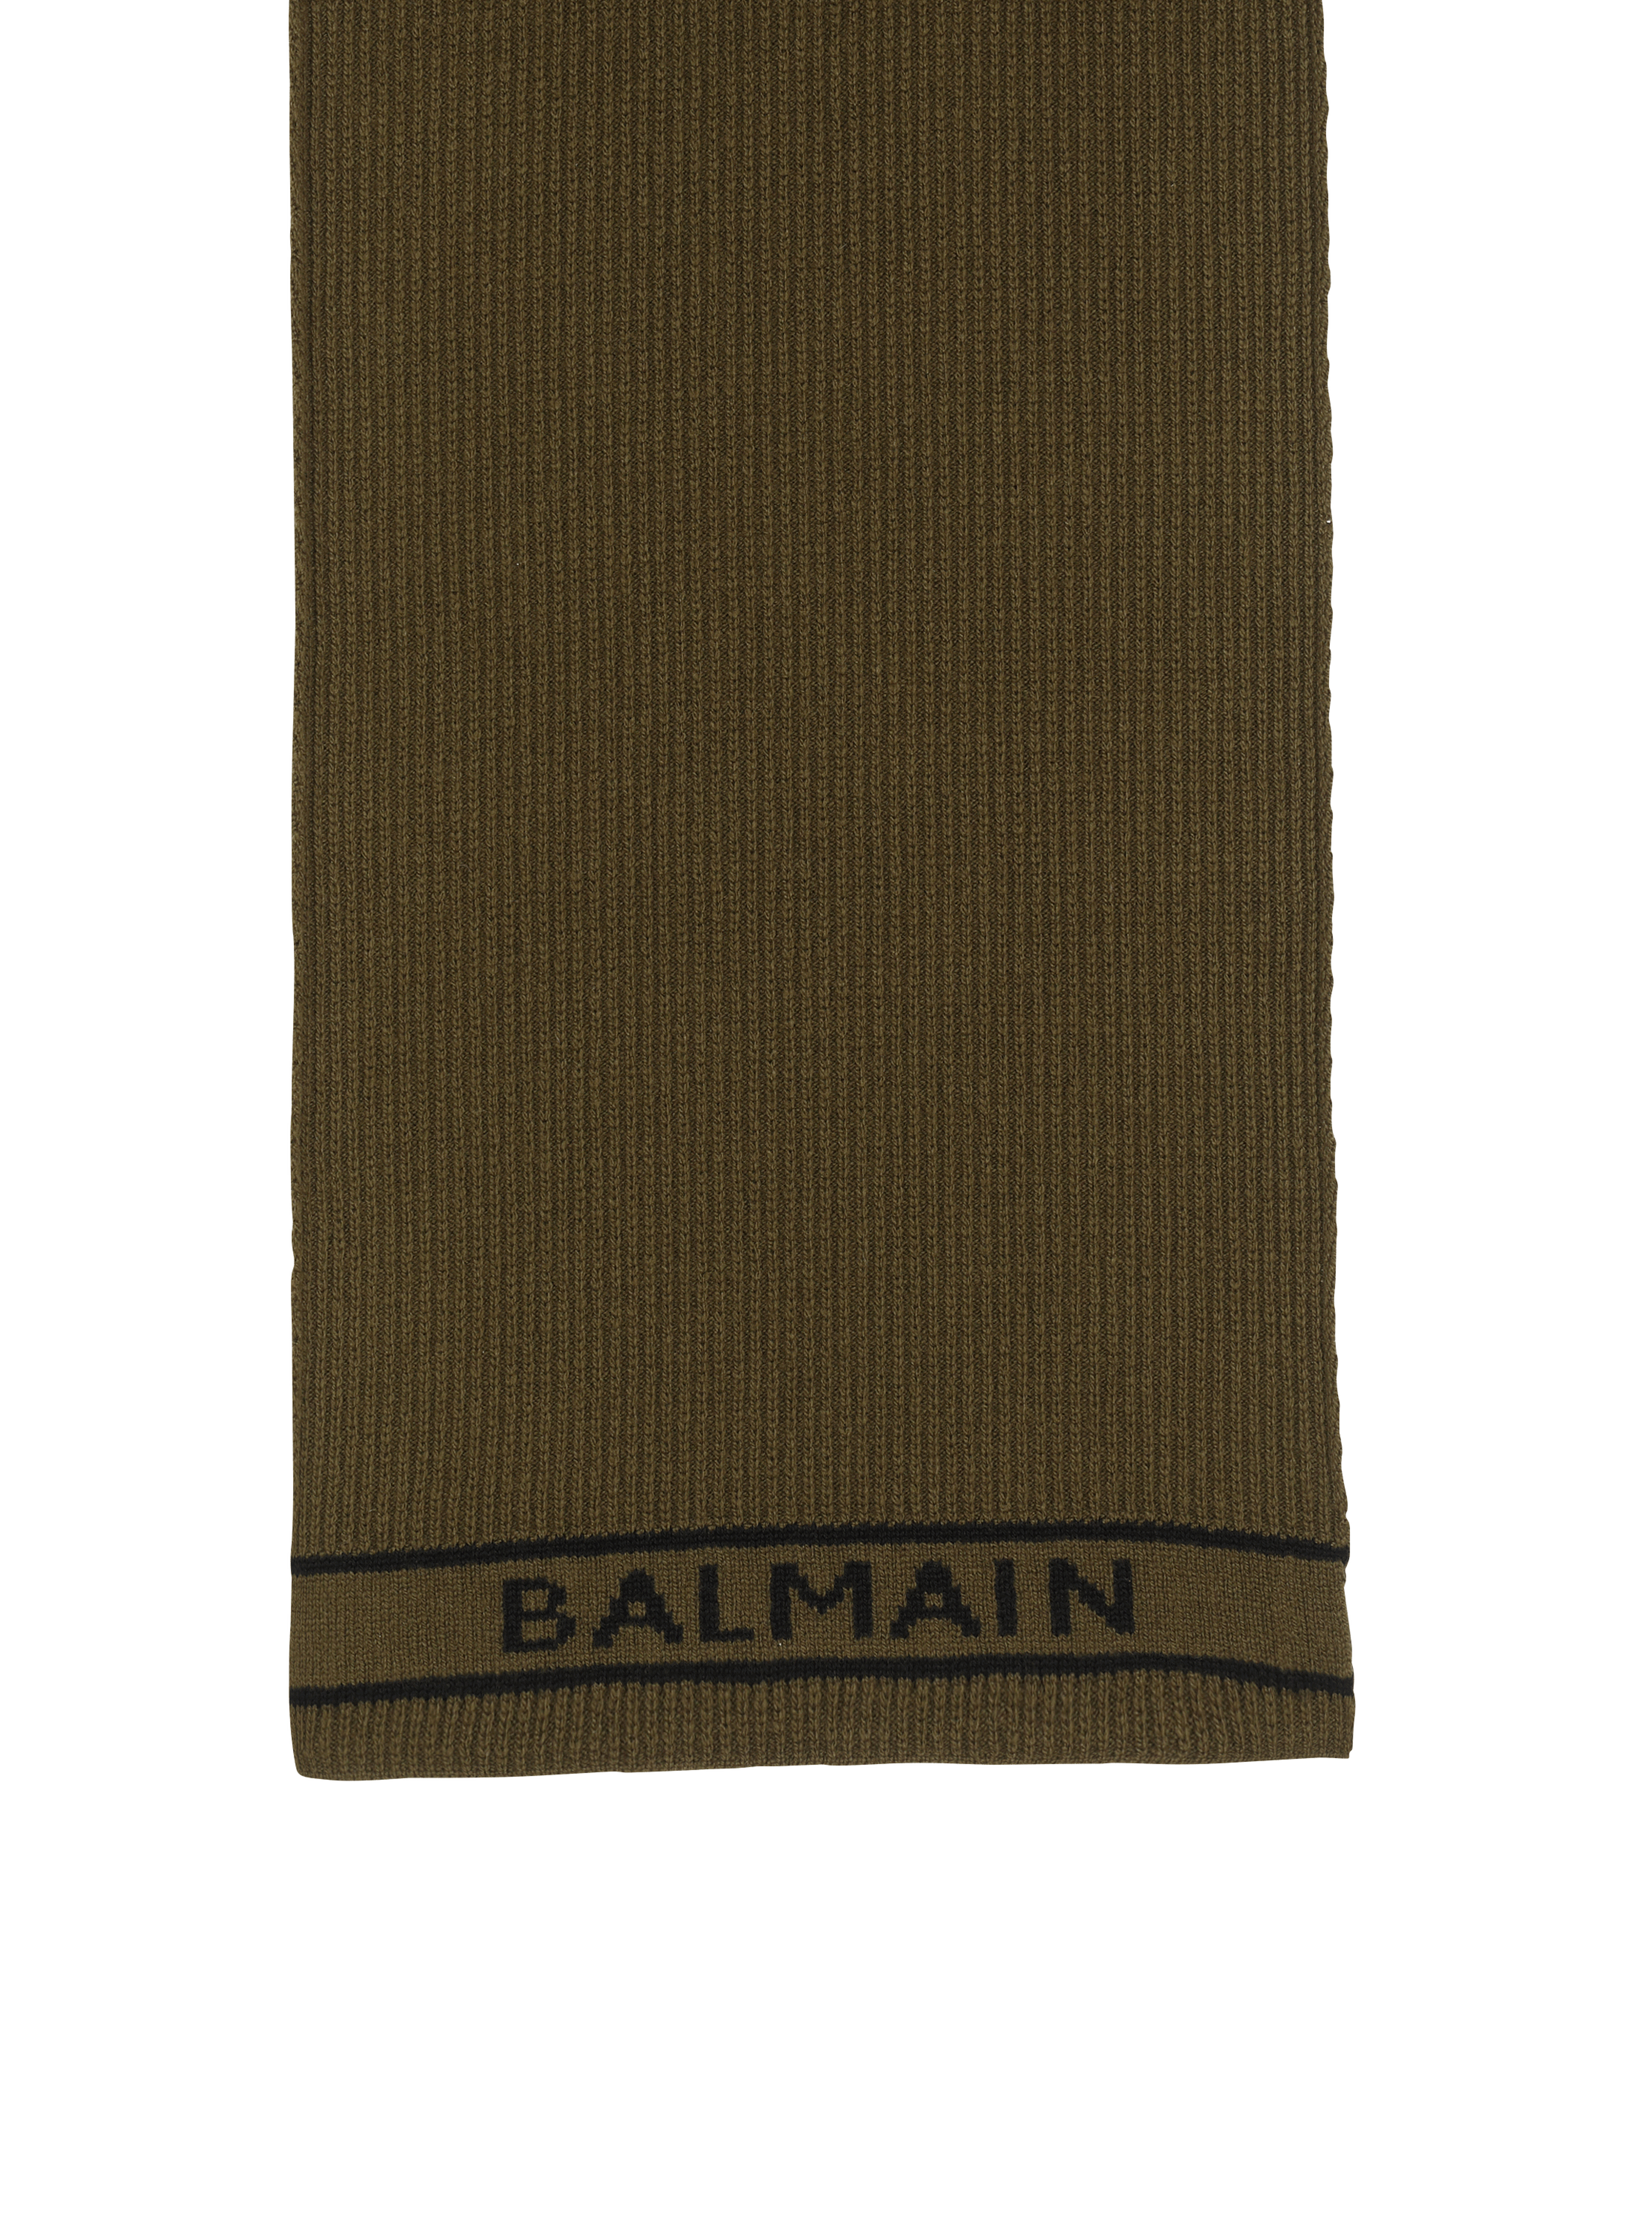 Wool scarf with Balmain logo, khaki